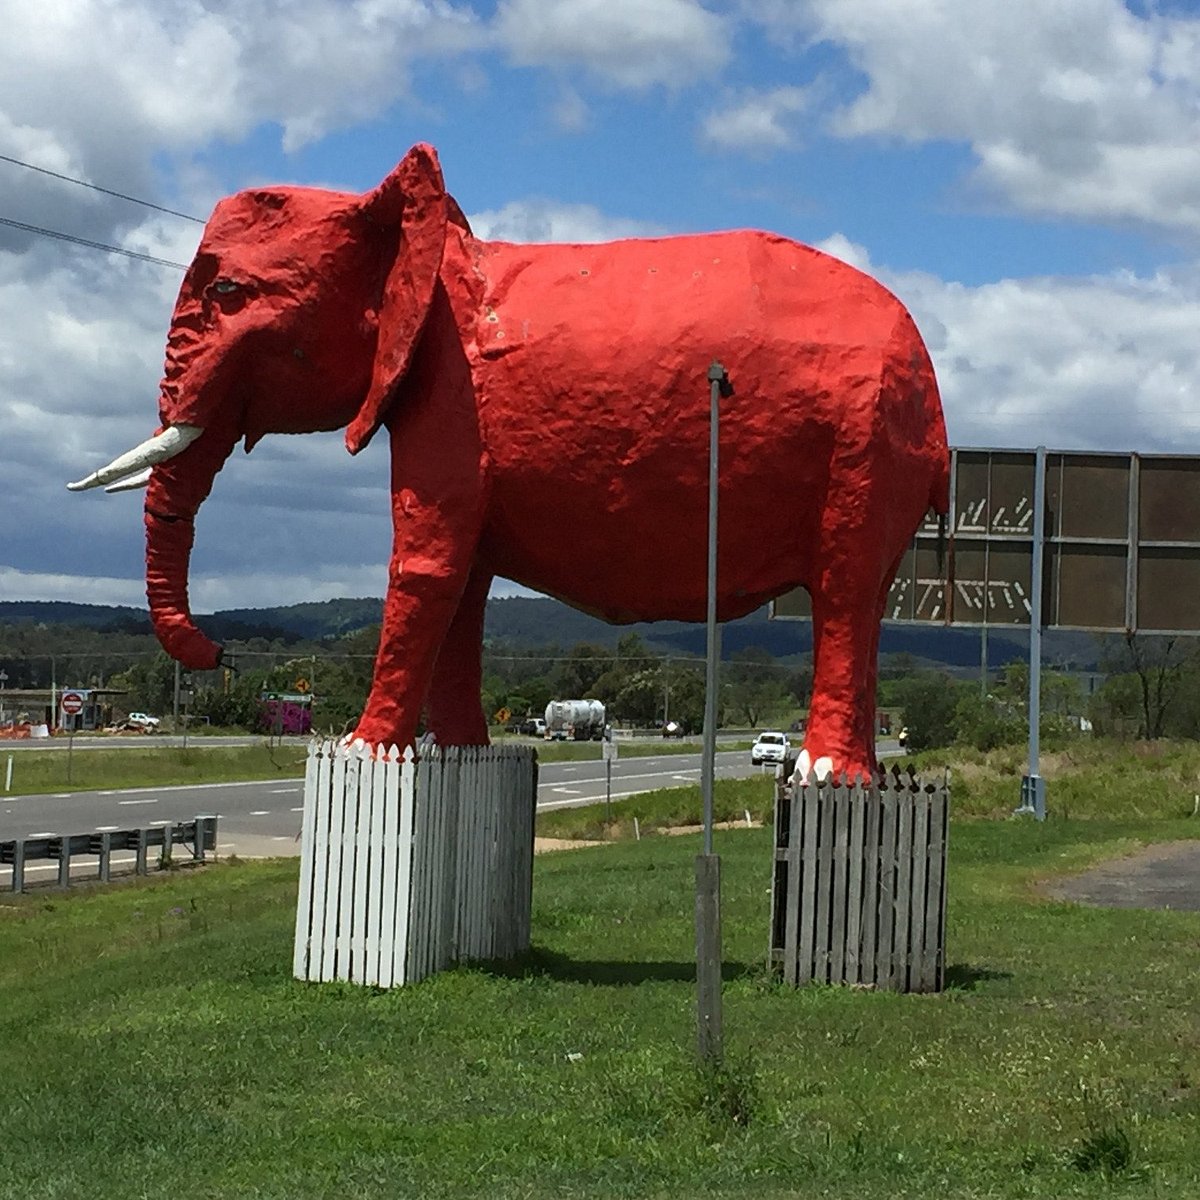 https://dynamic-media-cdn.tripadvisor.com/media/photo-o/11/48/d9/53/this-is-the-big-red-elephant.jpg?w=1200&h=1200&s=1